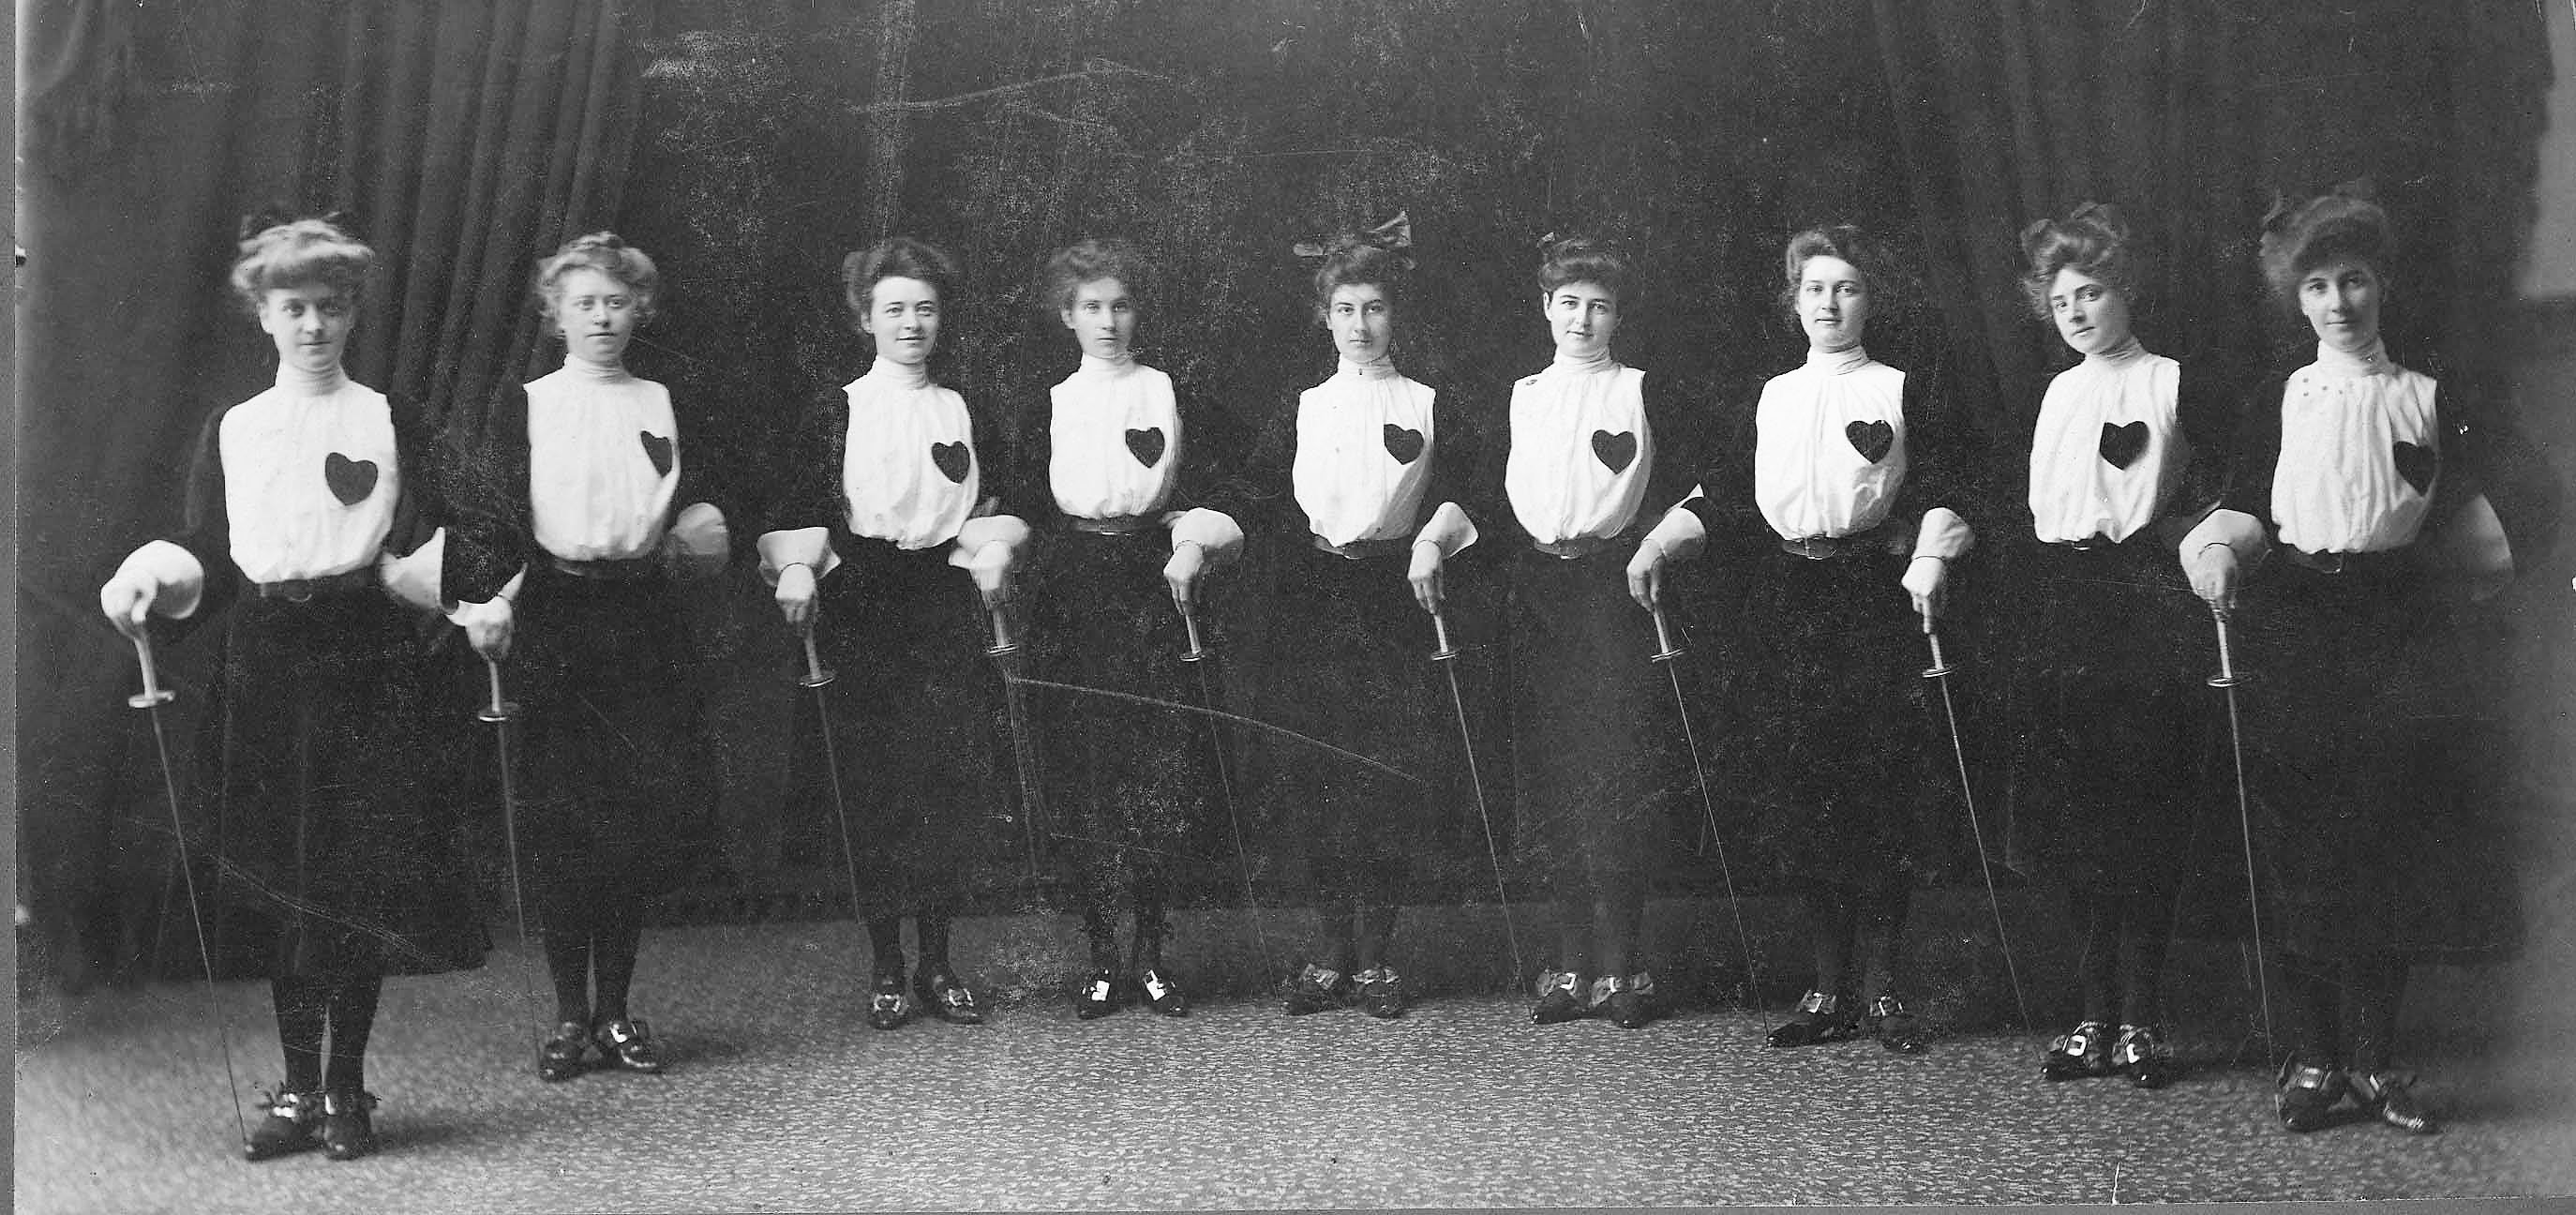 1902 ca Anonyme G fencers club